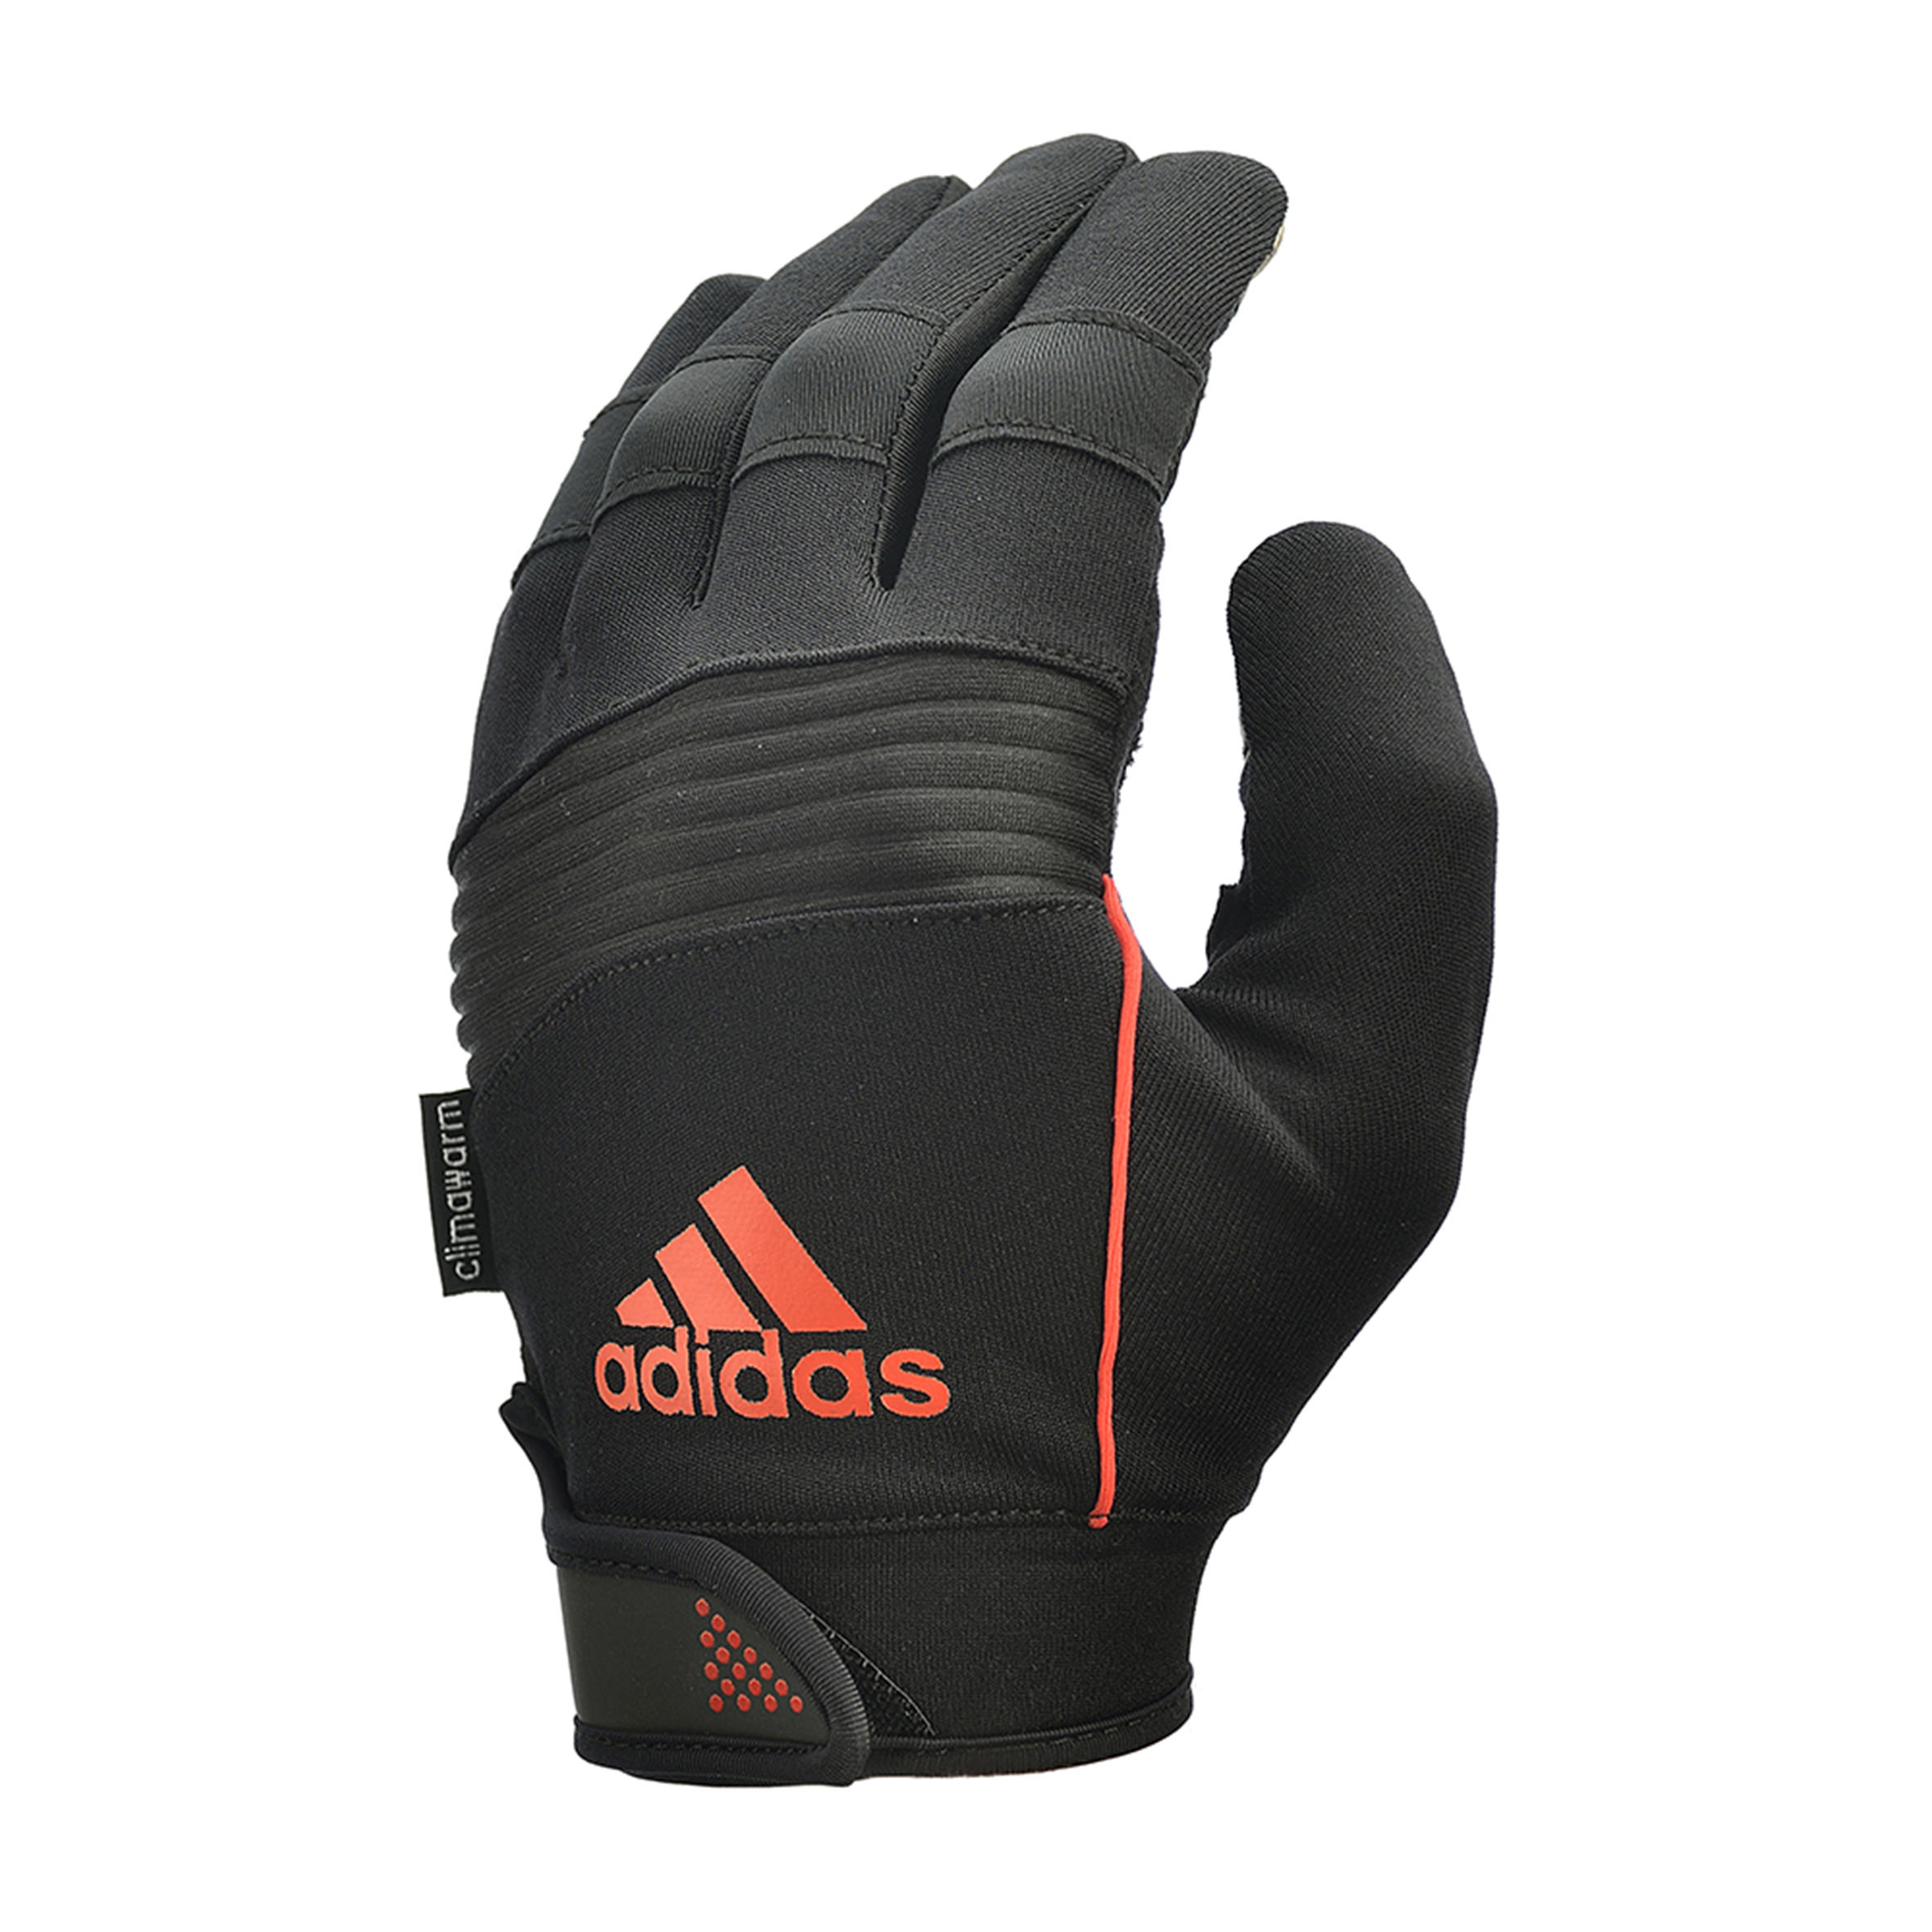 ADIDAS Climacool Fitness Gloves - Black